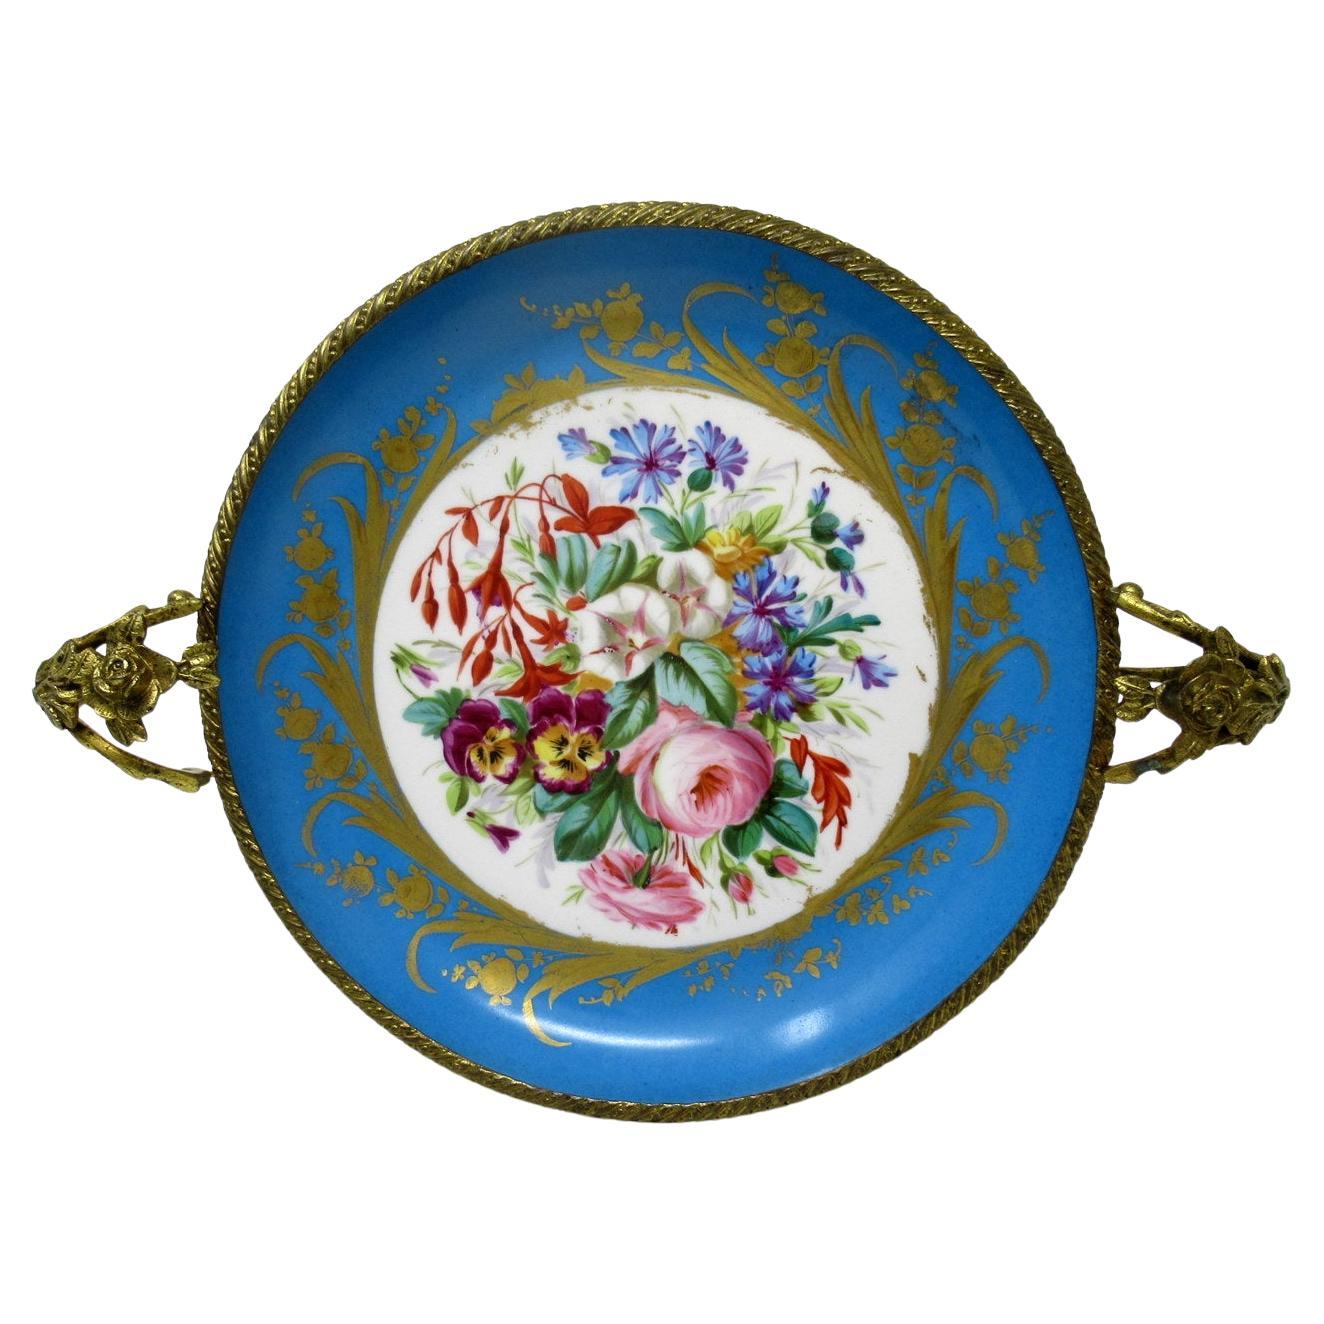 Antique French Sevres Ormolu Gilt Bronze Dore Porcelain Tazza Cabinet Plate Dish